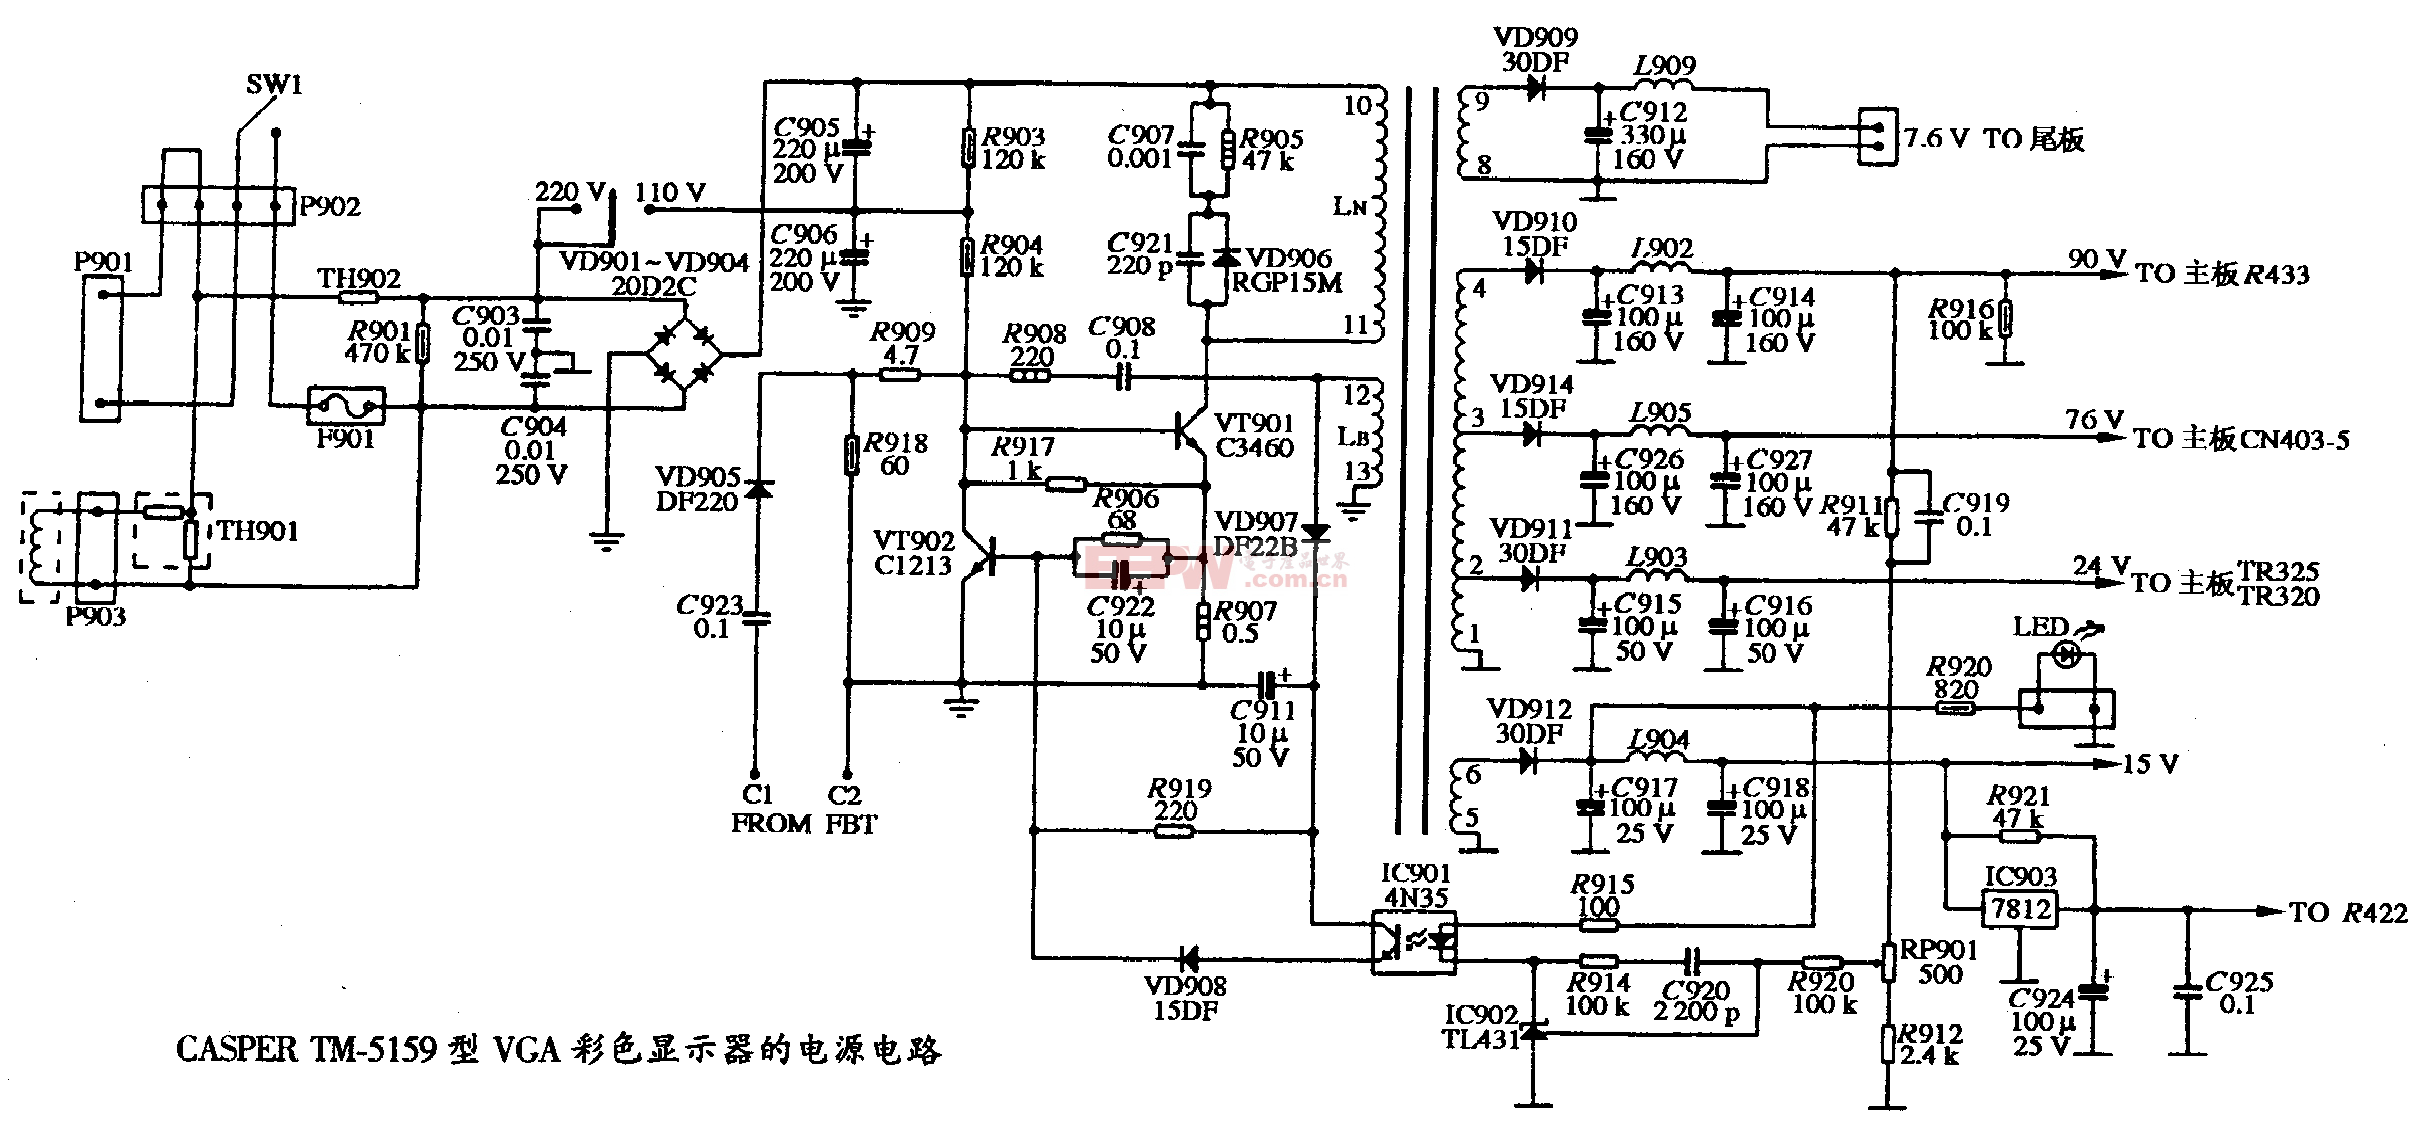 025 CASPER TM-5159型VGA彩色显示器的电源电路图